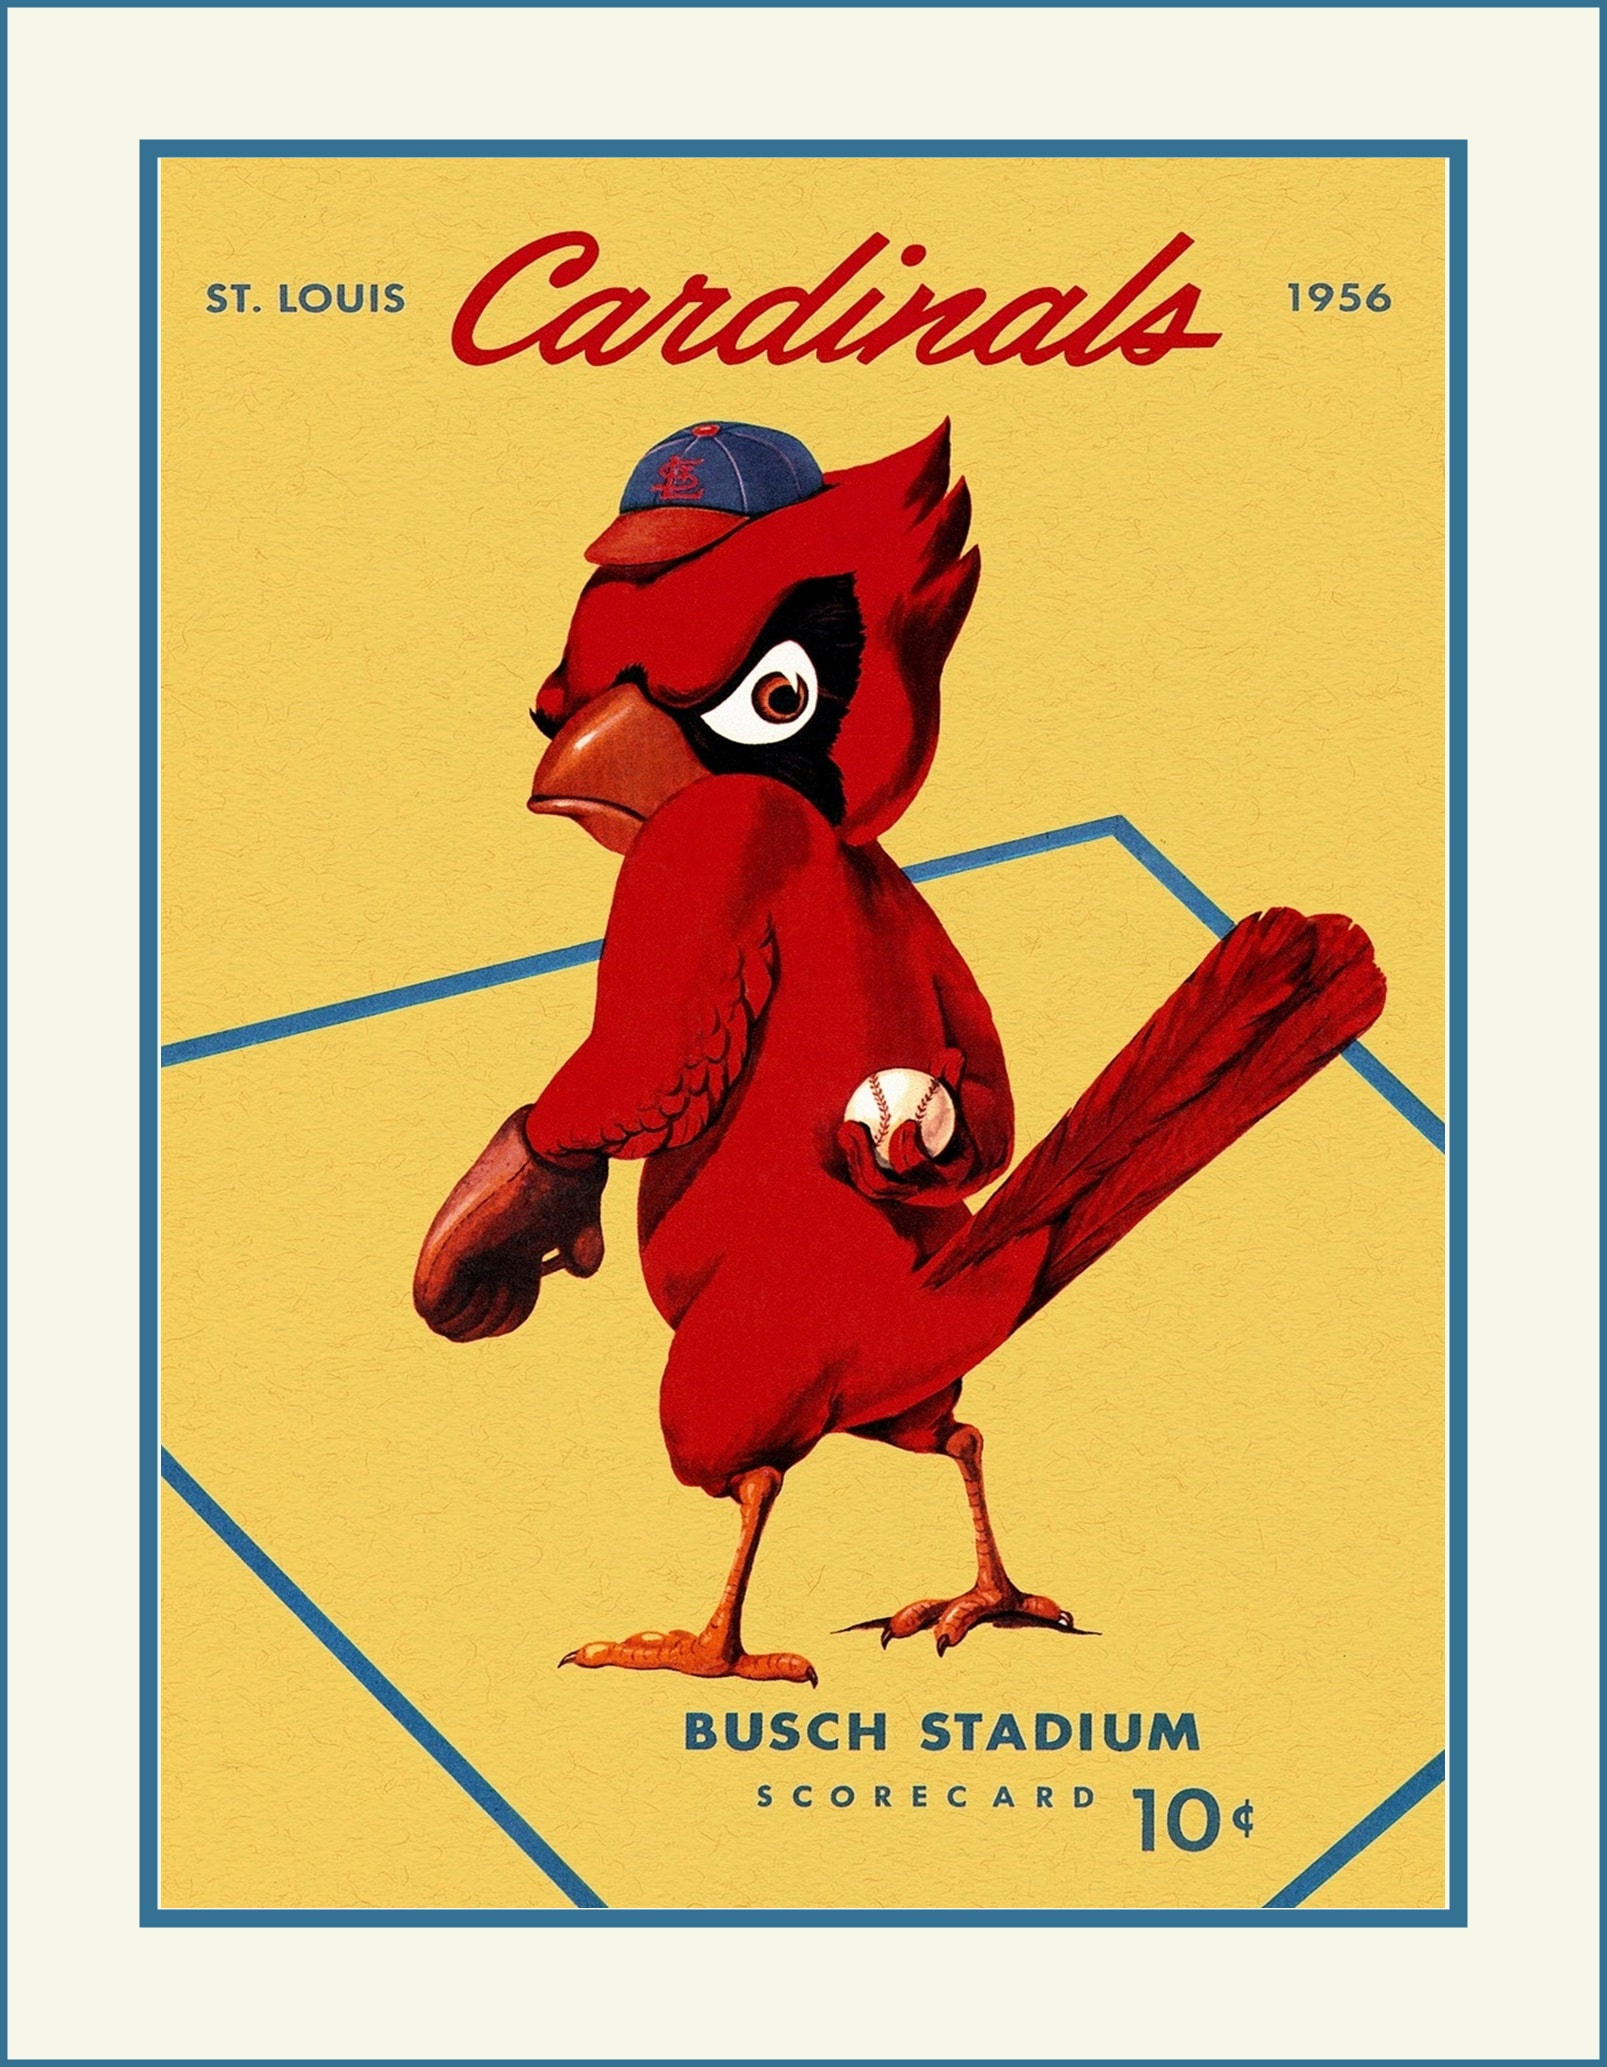 St. Louis Cardinals poster